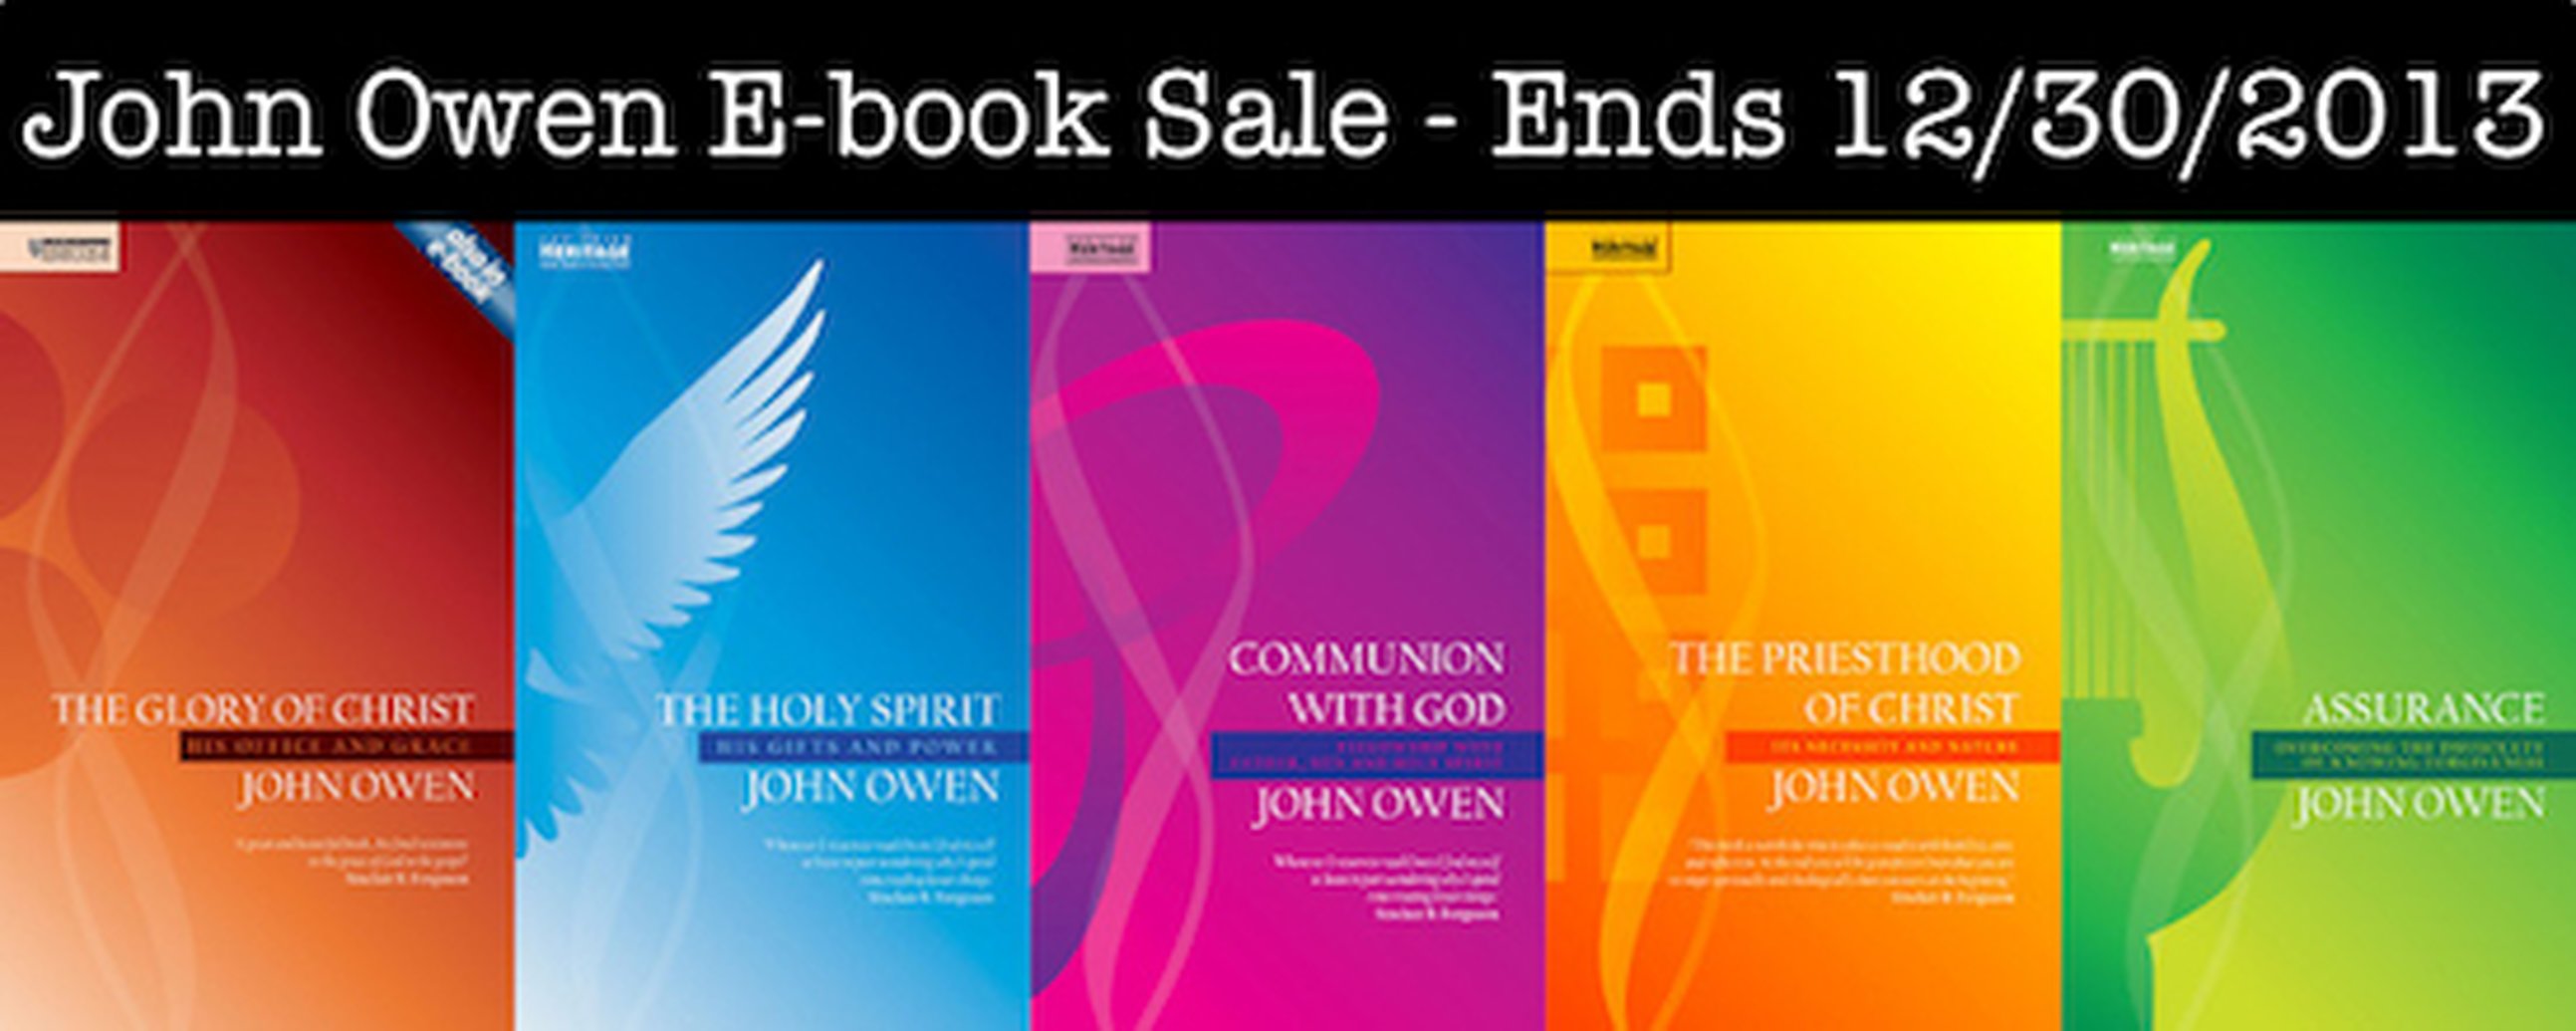 John Owen E-book Sale